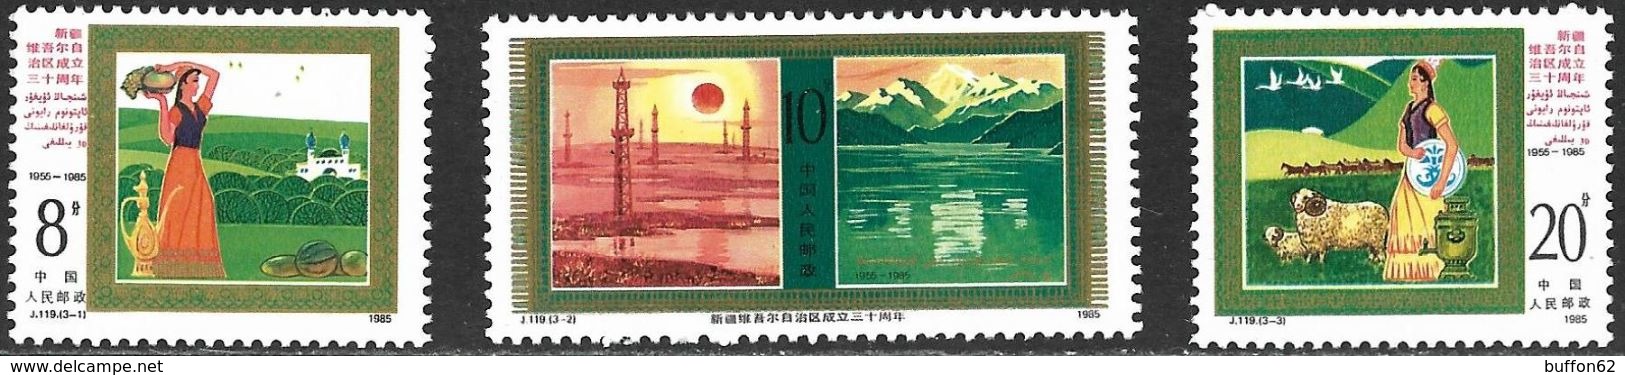 Chine / China (1985) - Champ Pétrolifère / Oil Field. Oasis Pâturage, Moutons. Région Xinjiang Uygur. MNH. - Petrolio